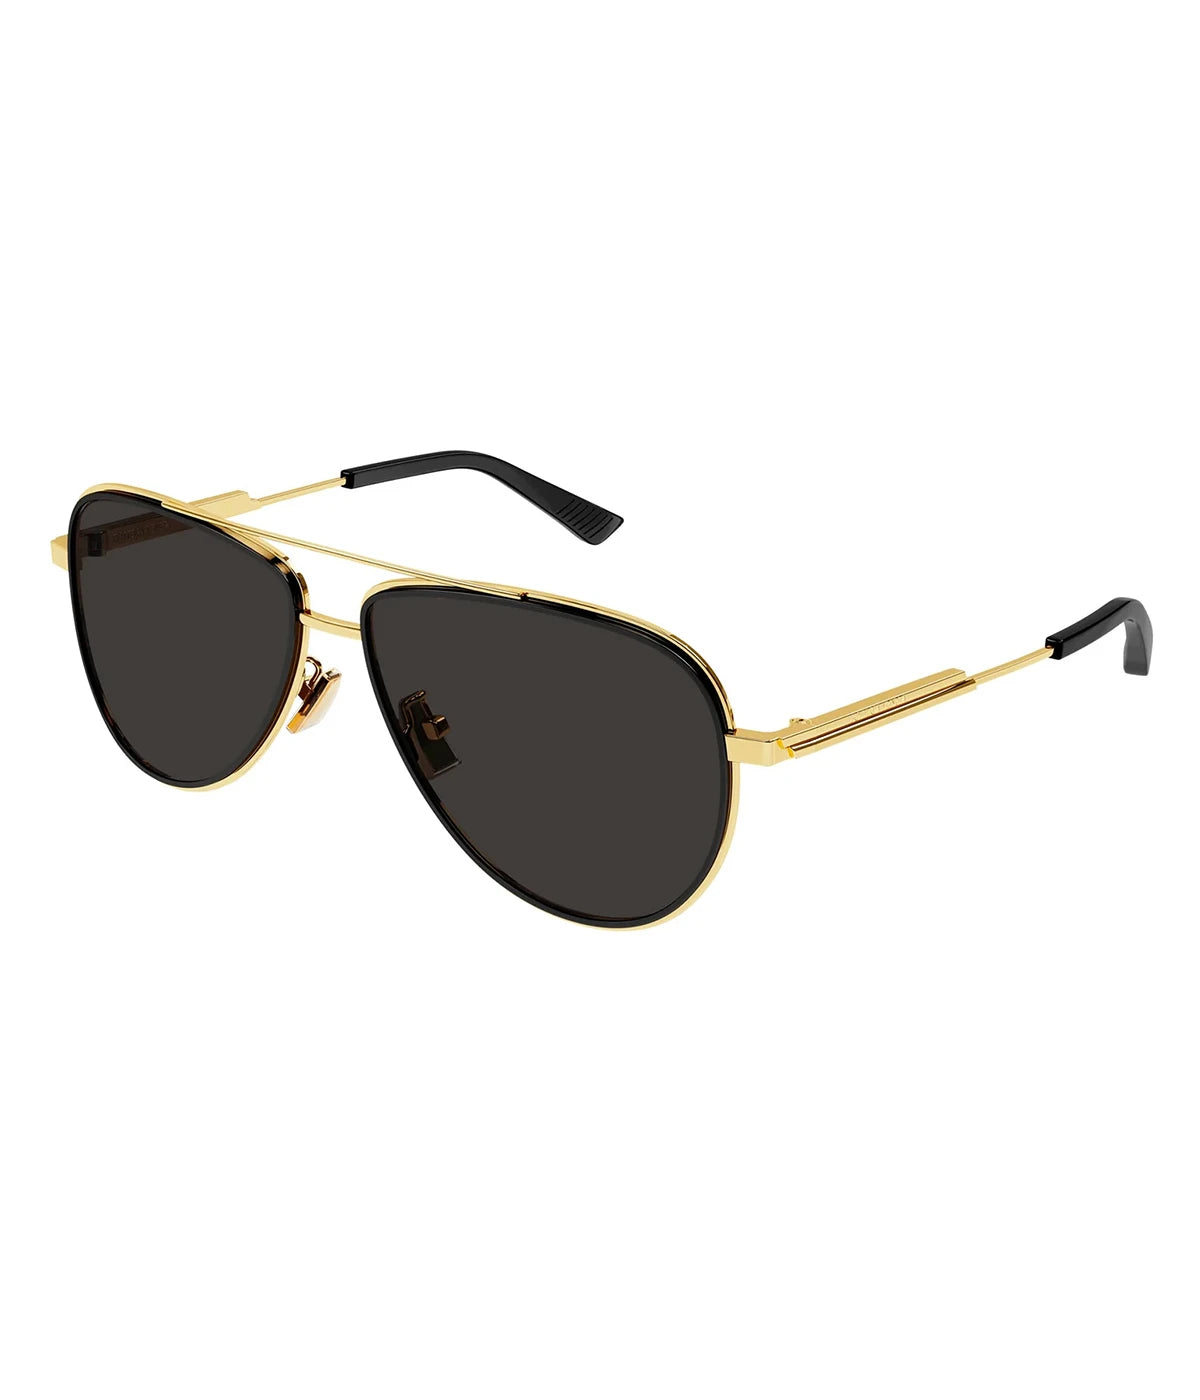 Aviator Sunglasses in Gold